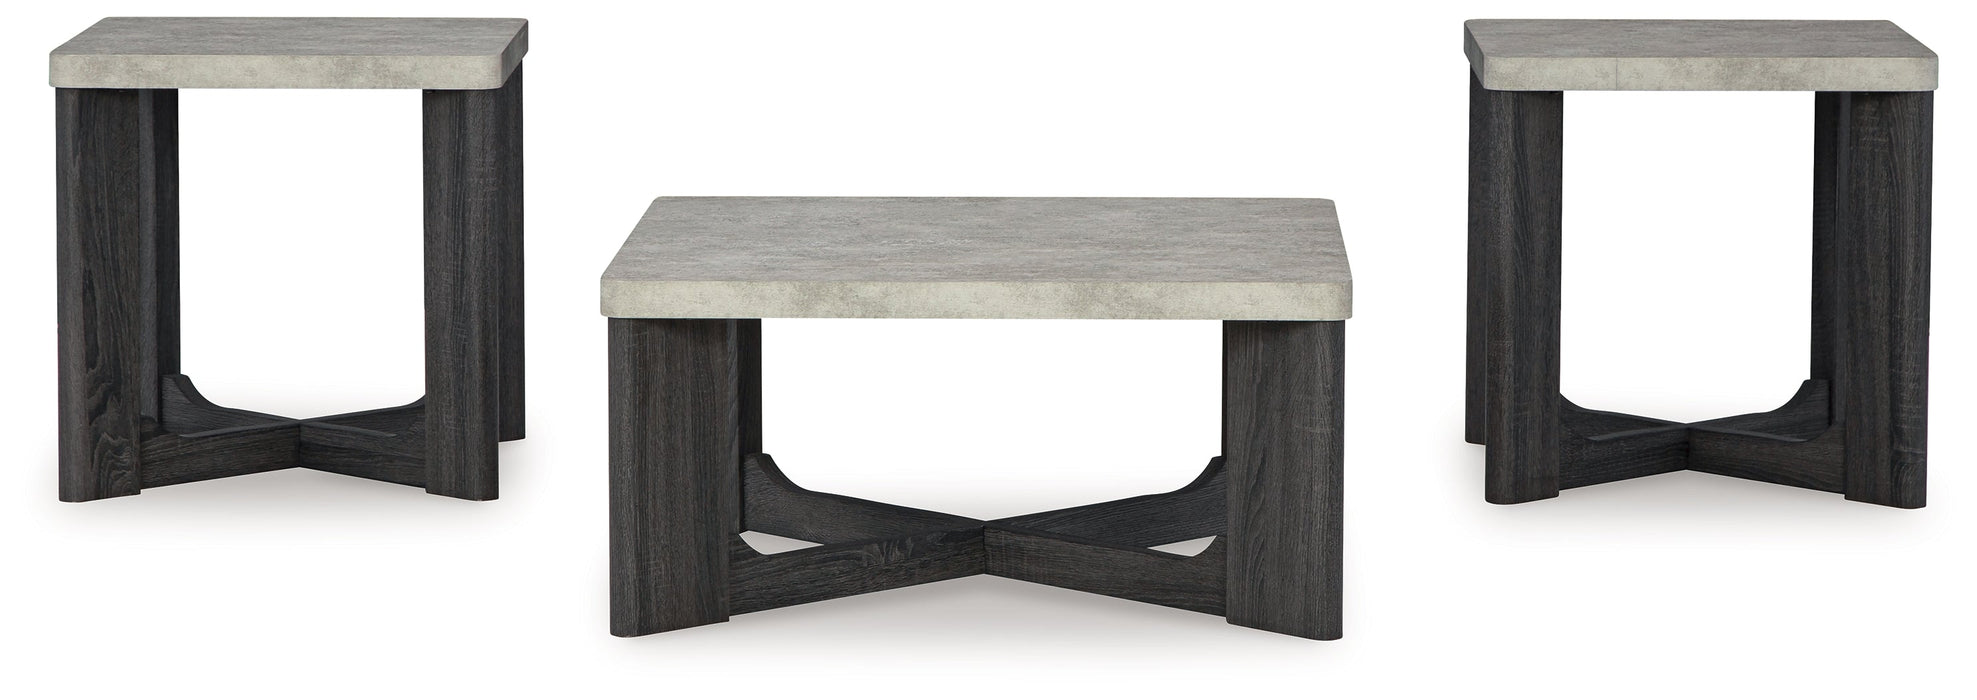 Sharstorm Two-tone Gray Table (Set of 3) - T251-13 - Vega Furniture